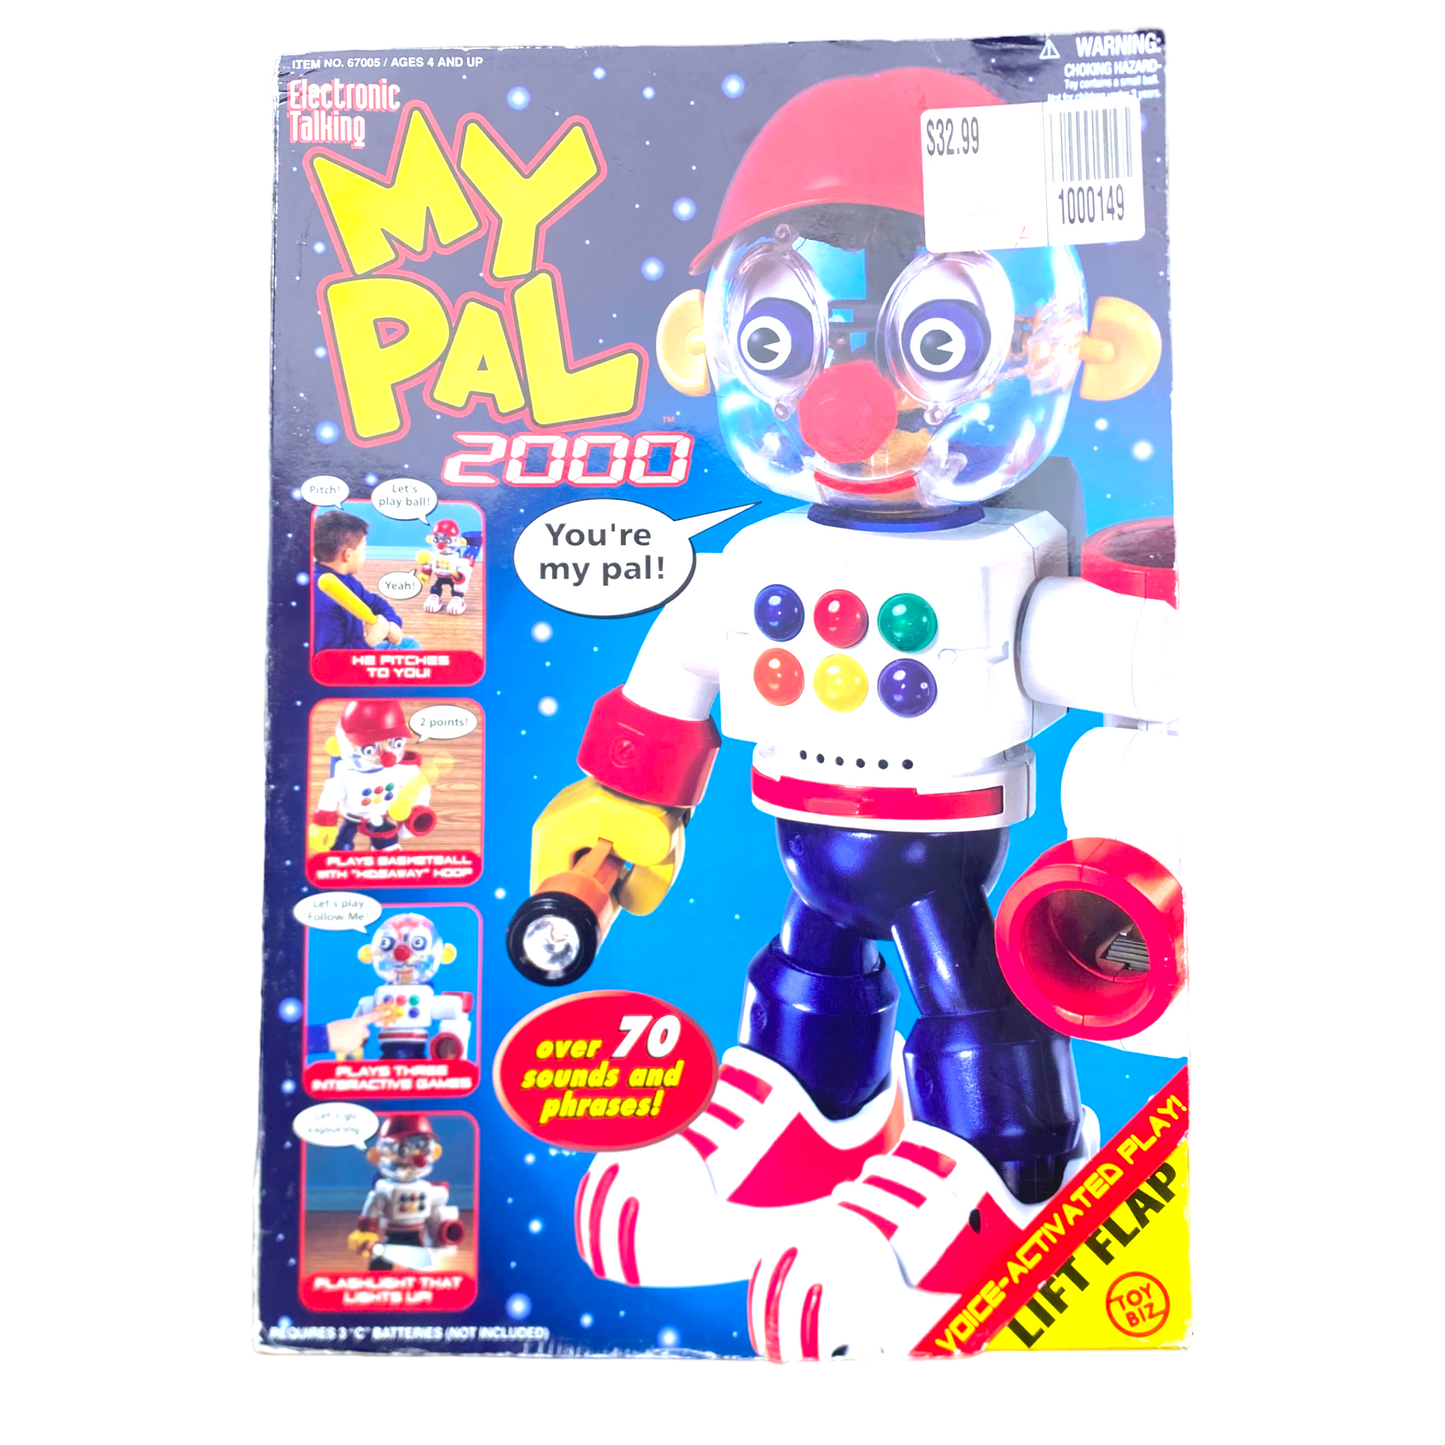 Toy Biz - My Pal 2000 Vintage 1999 Talking Action Figure